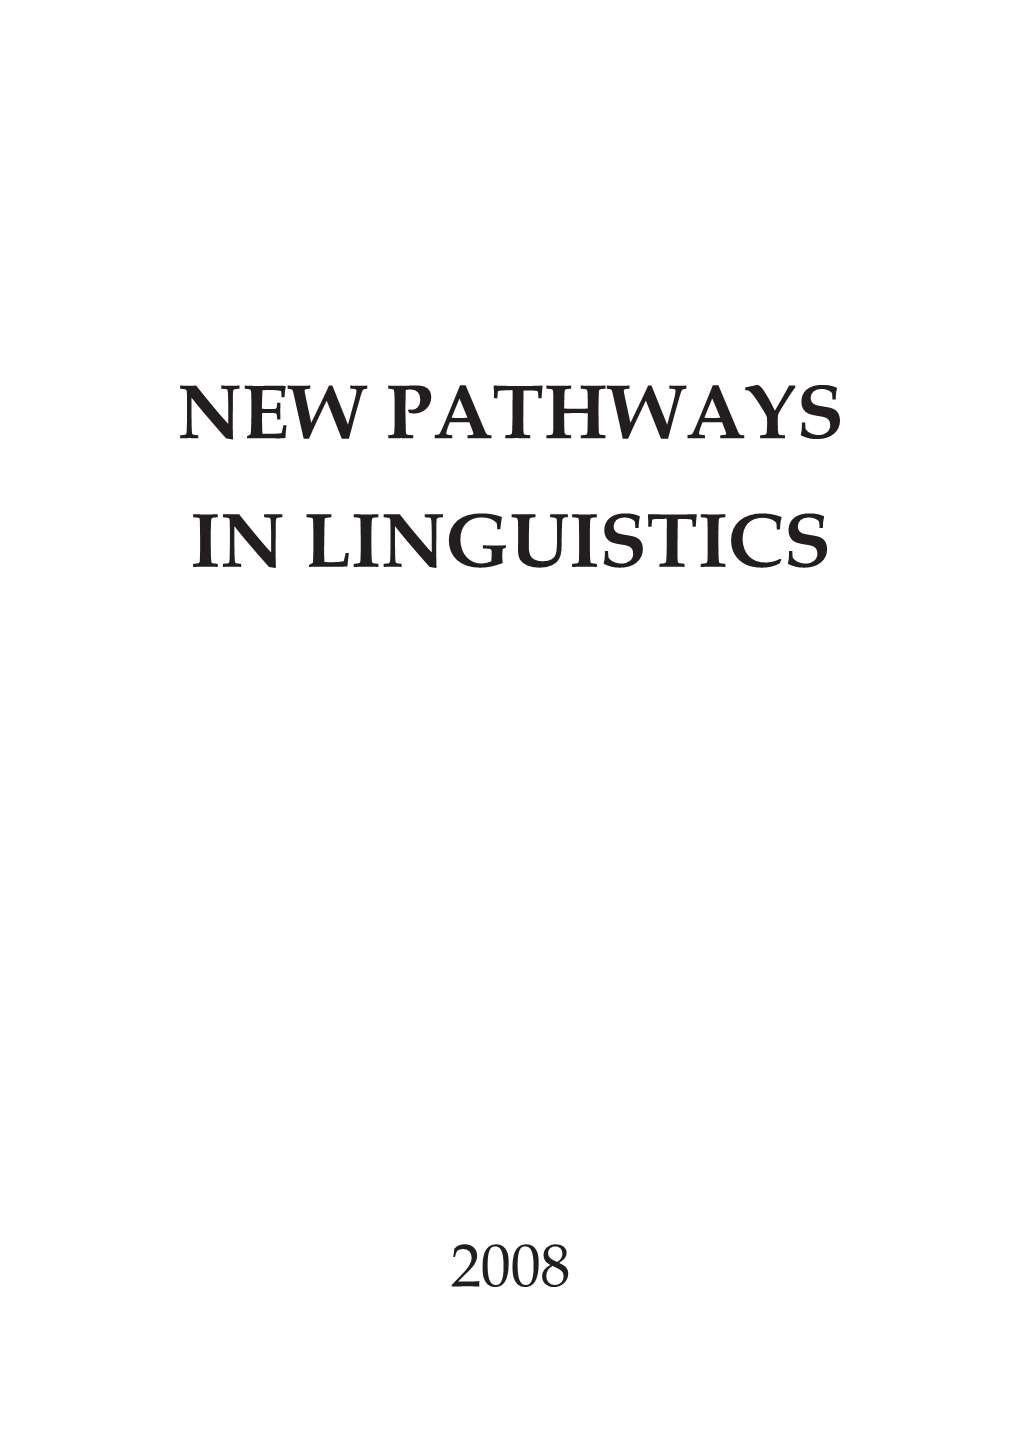 New Pathways in Linguistics